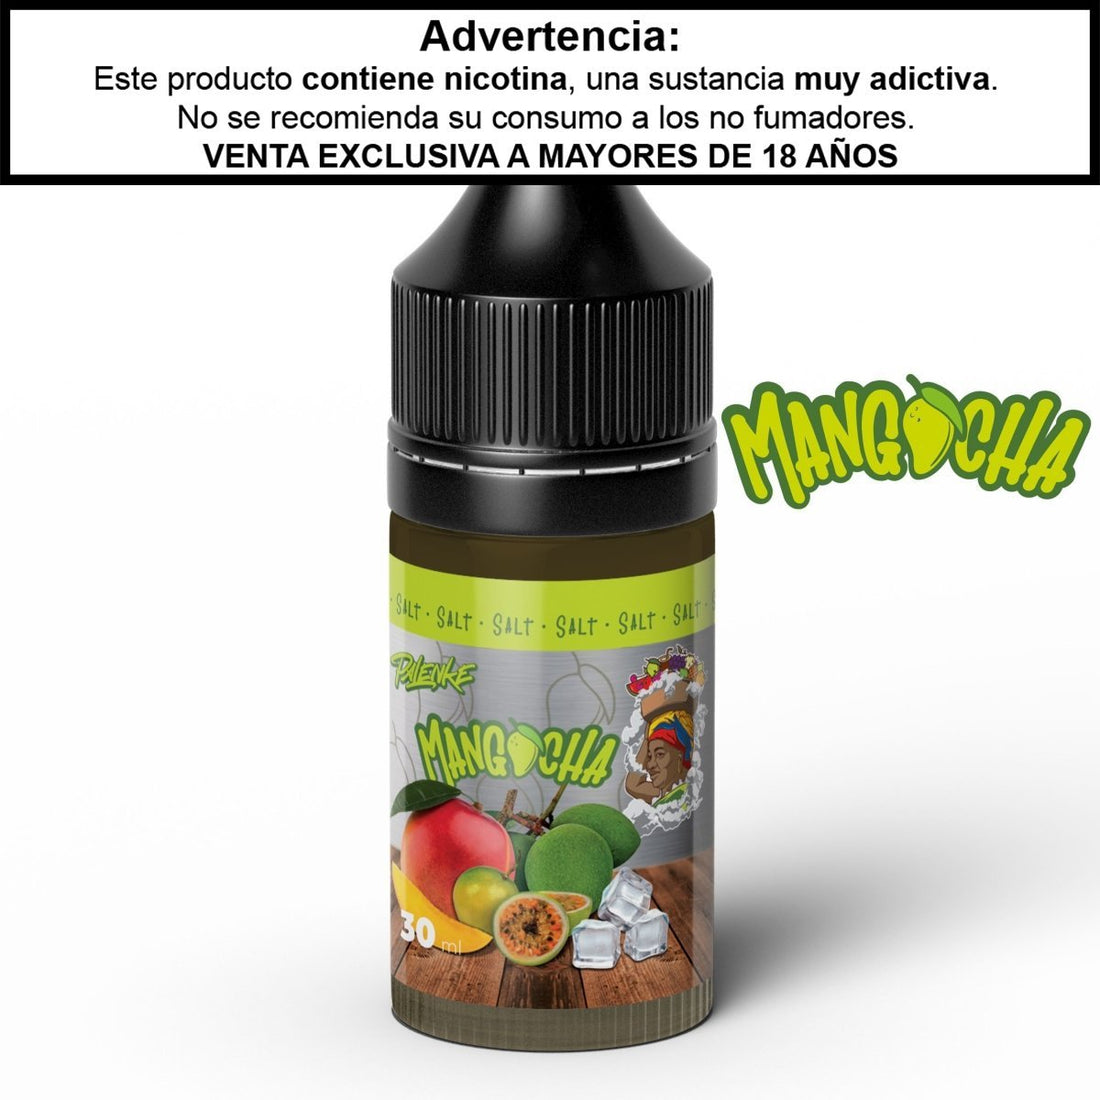 Mangocha Sales - Sales de Nicotina - Palenke Ejuice | SN-PLK-MGC-25